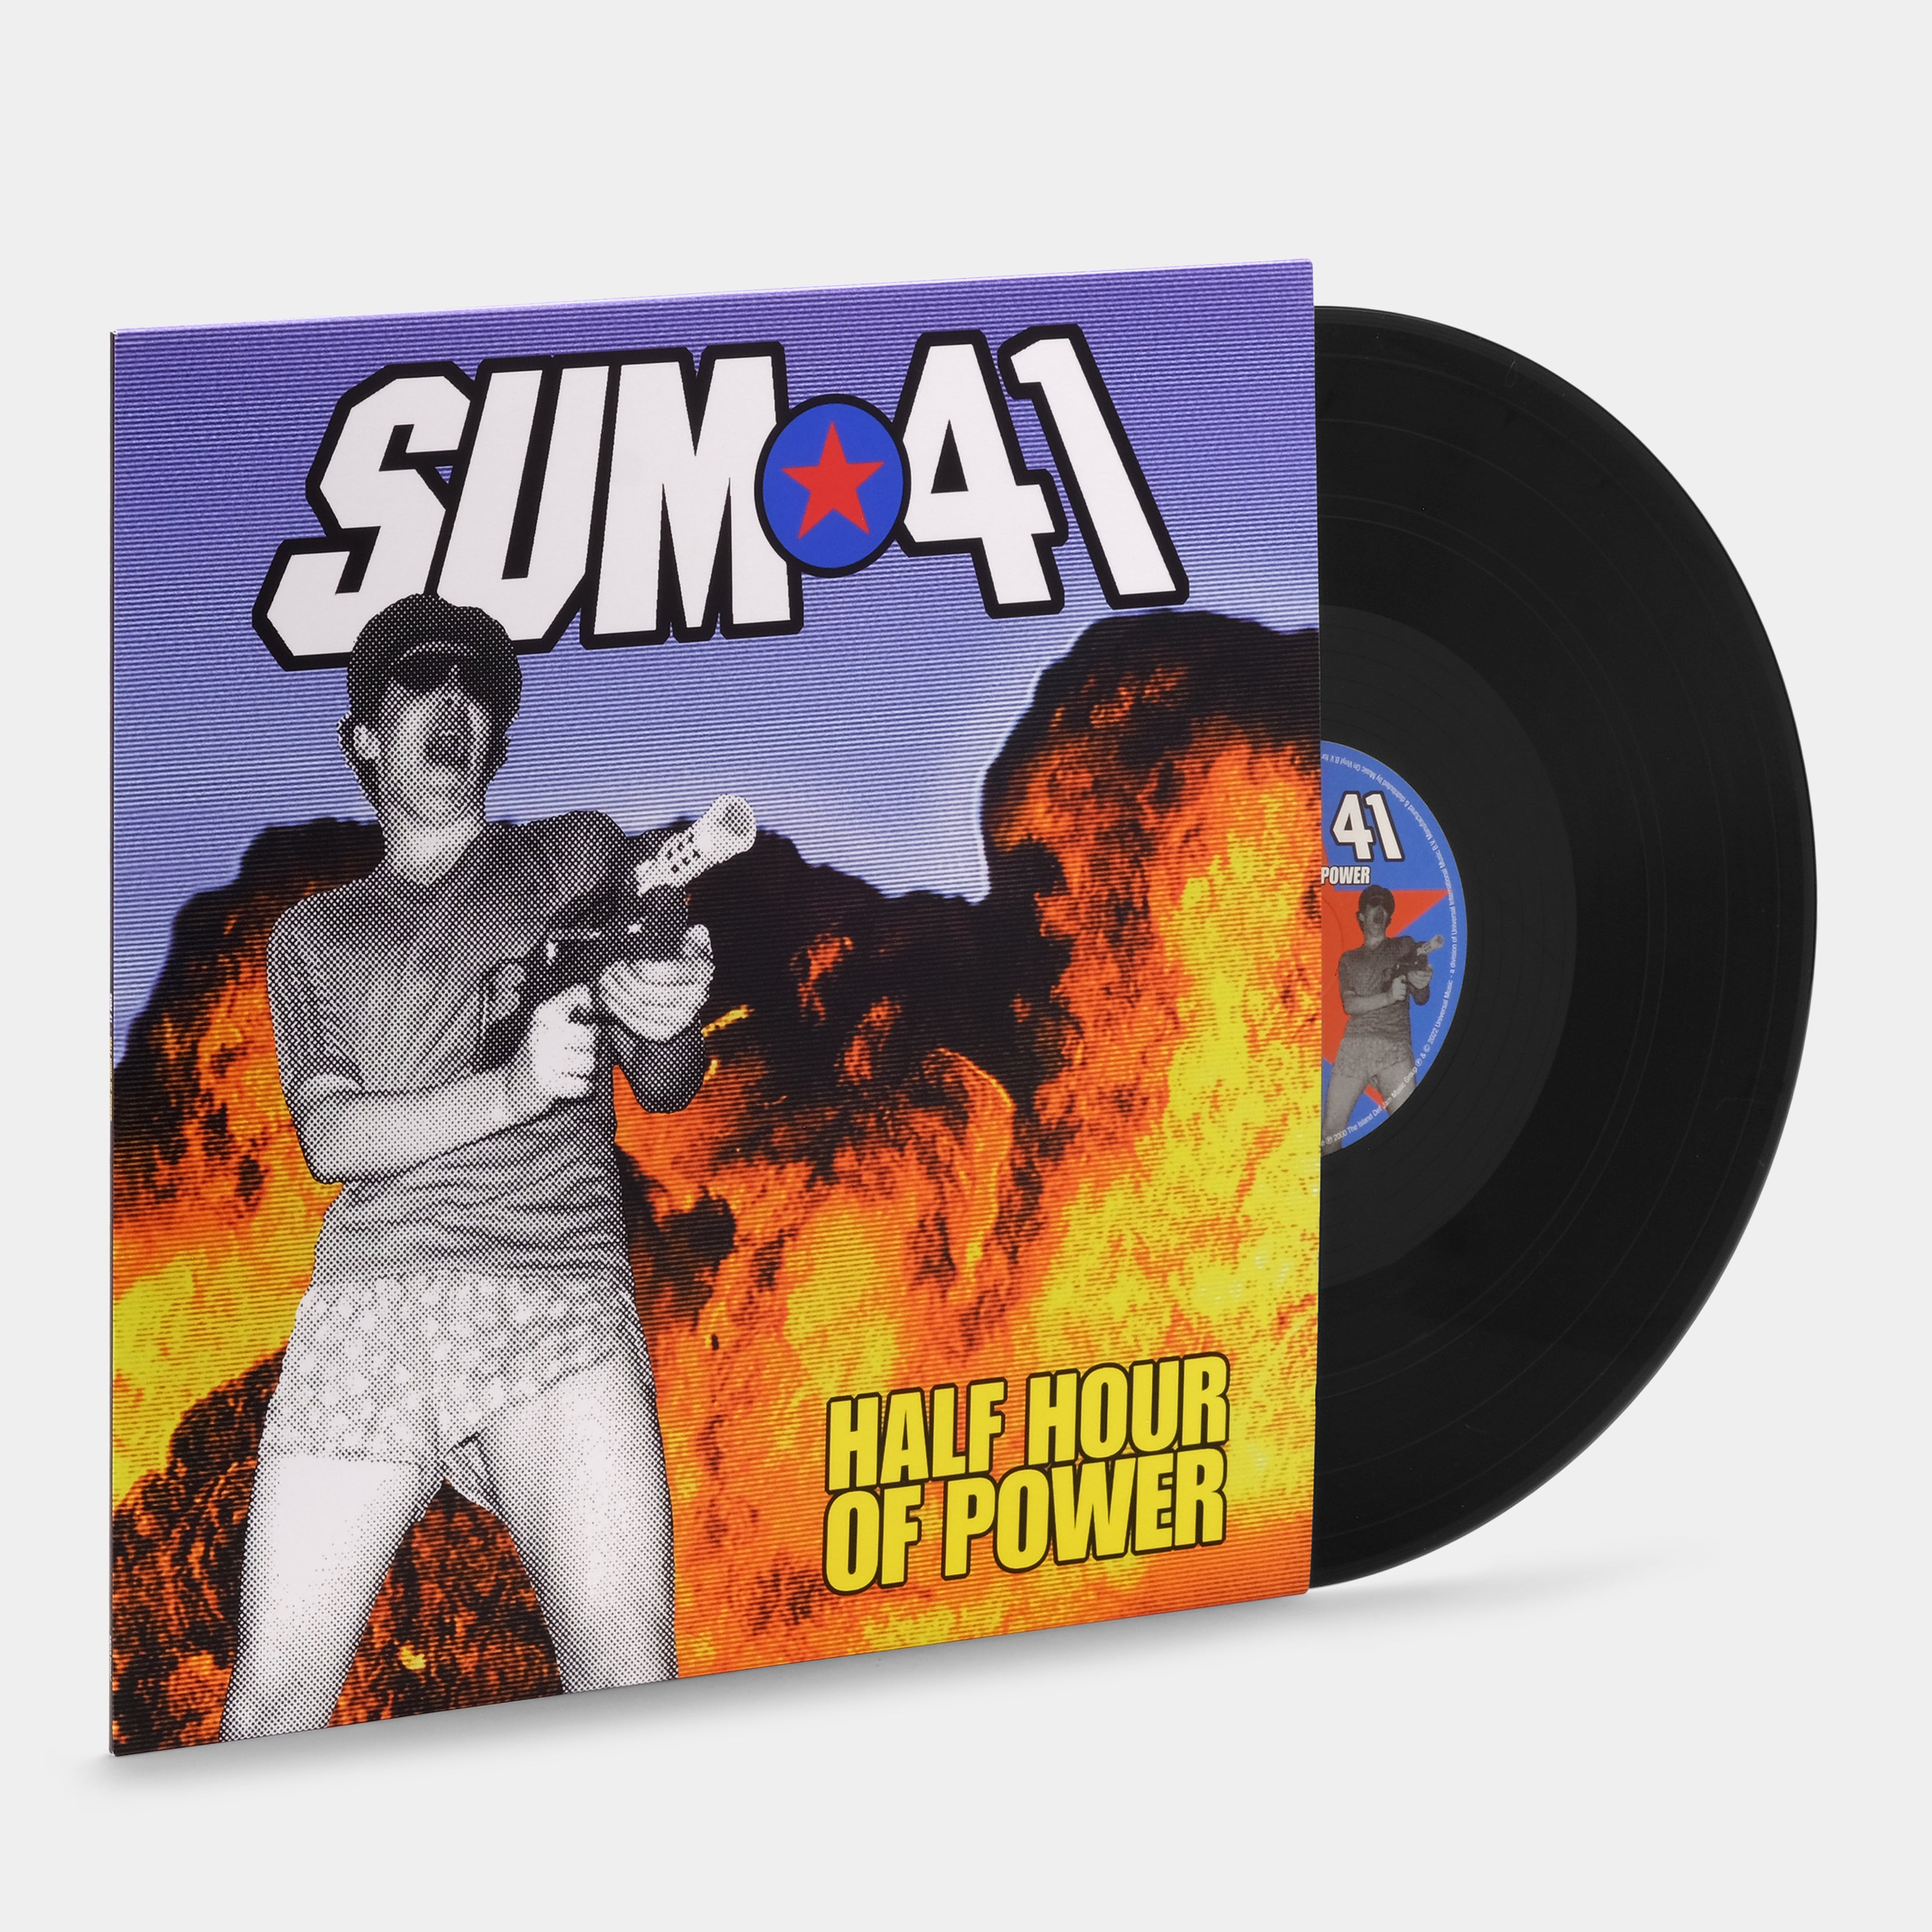 Sum 41 - Half Hour Of Power LP Vinyl Record